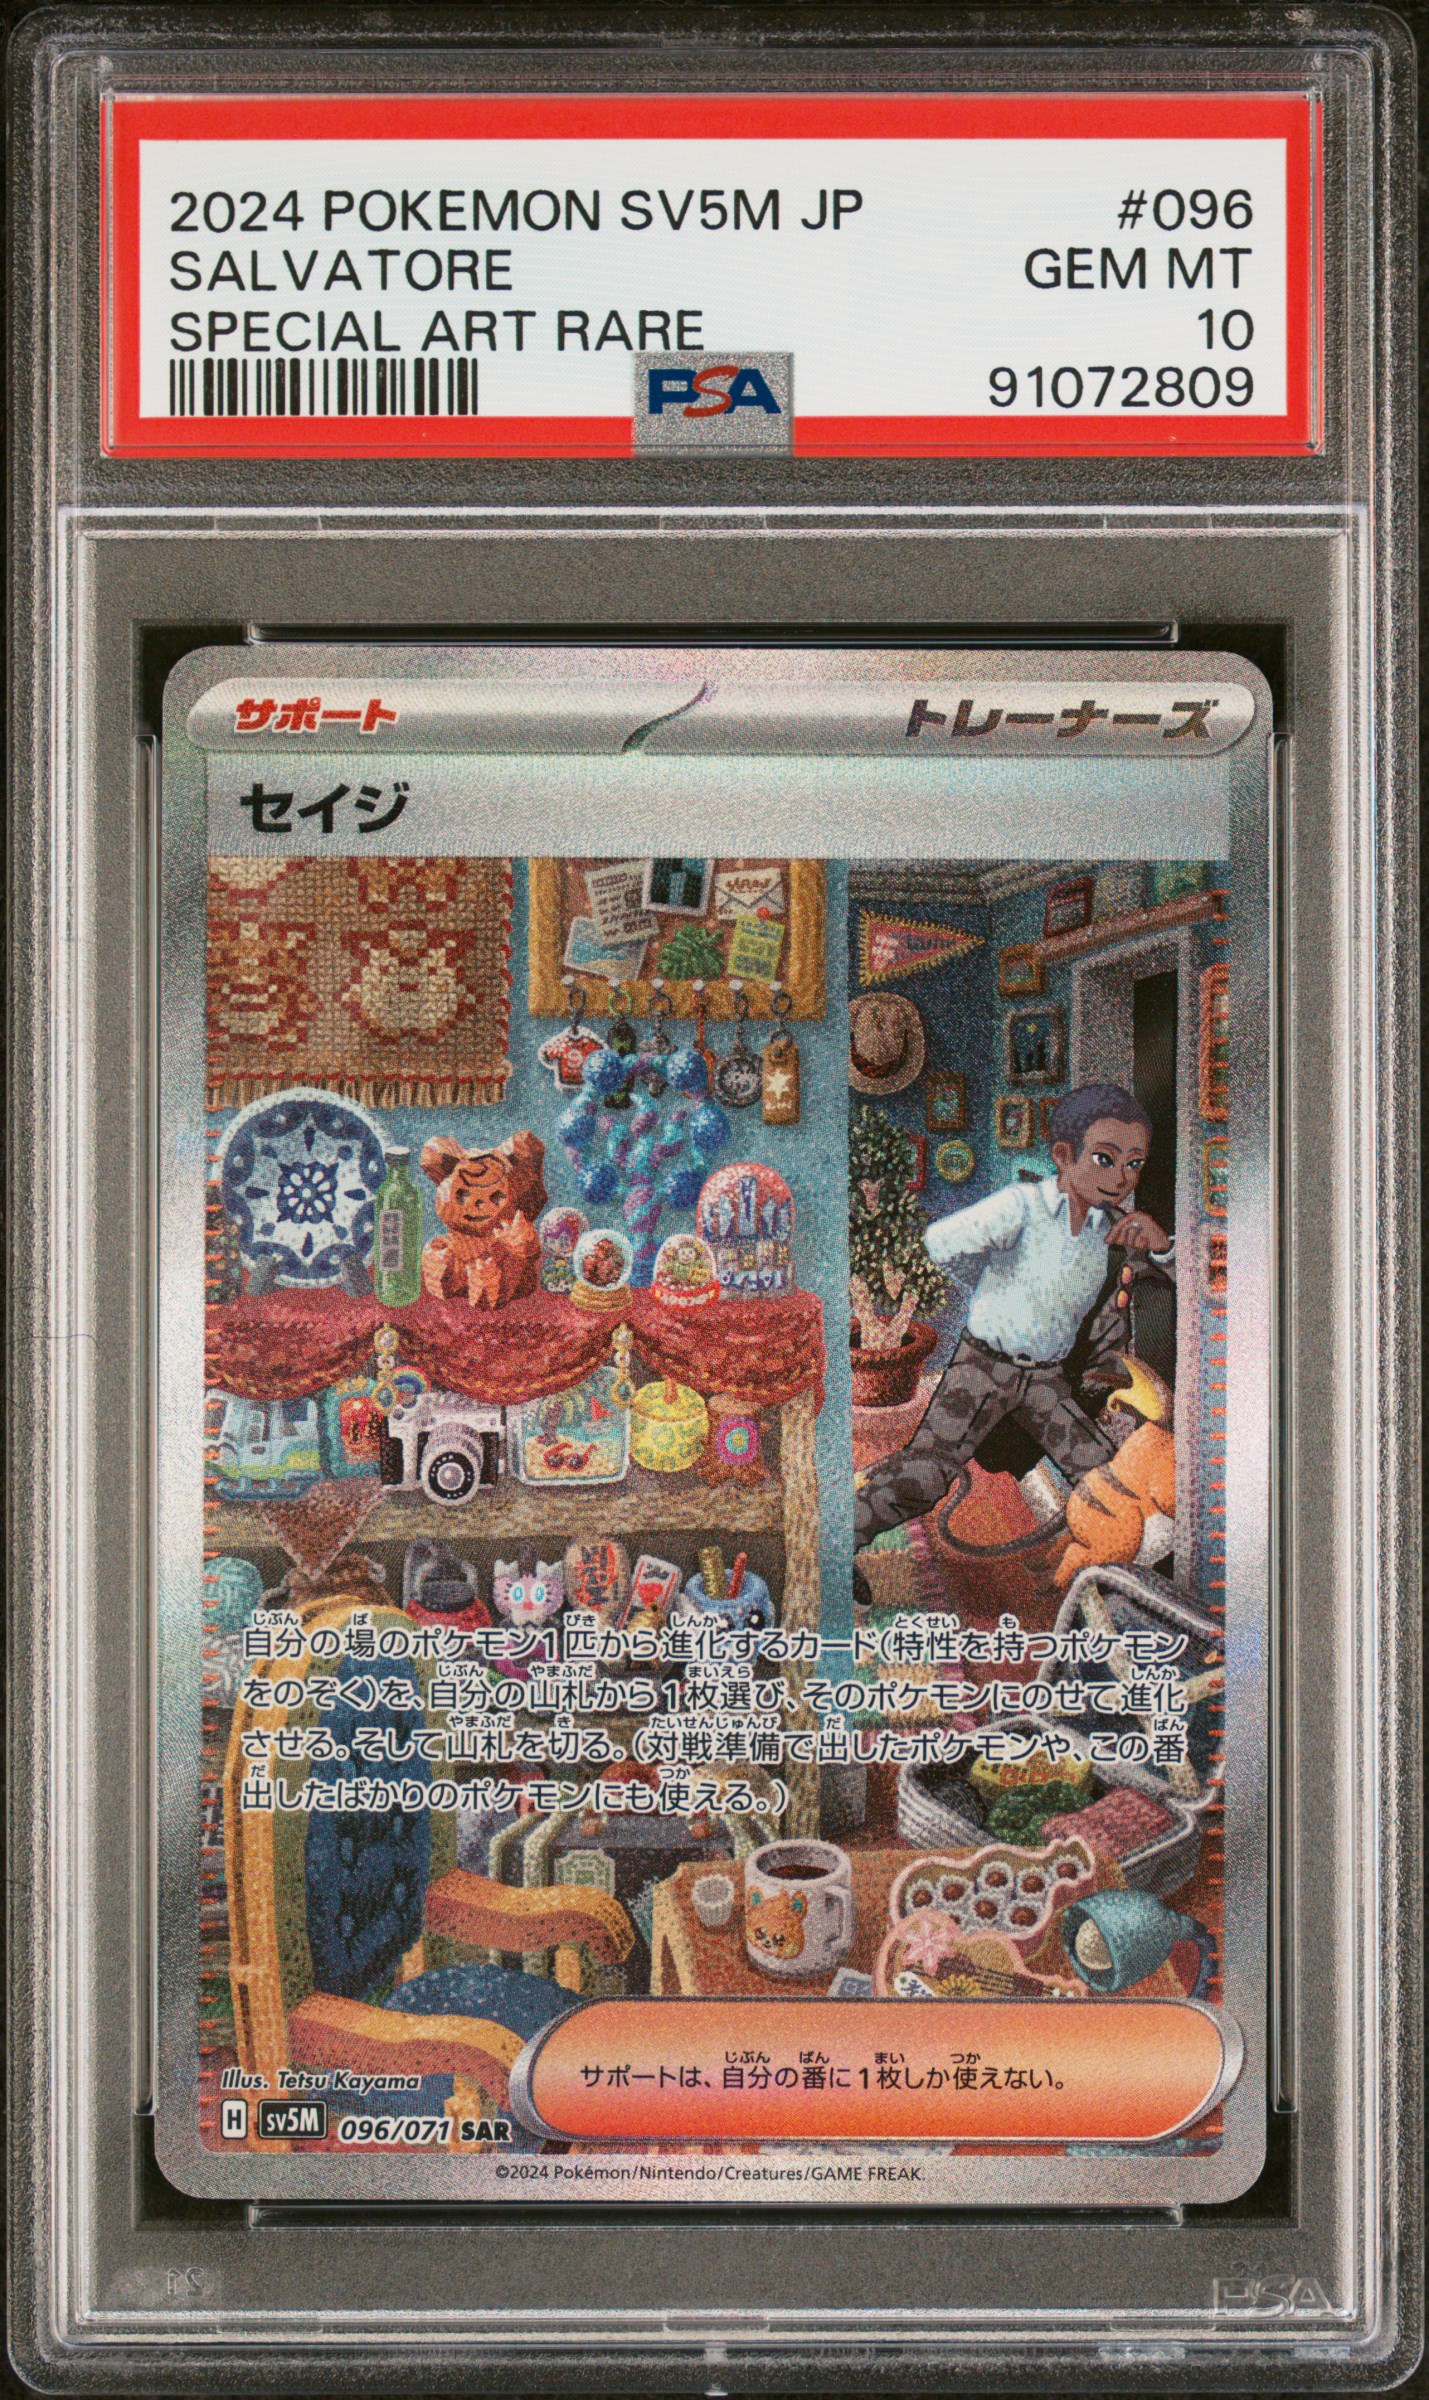 2024 Pokemon Japanese Sv5M-Cyber Judge Special Art Rare 096 Salvatore – PSA GEM MT 10